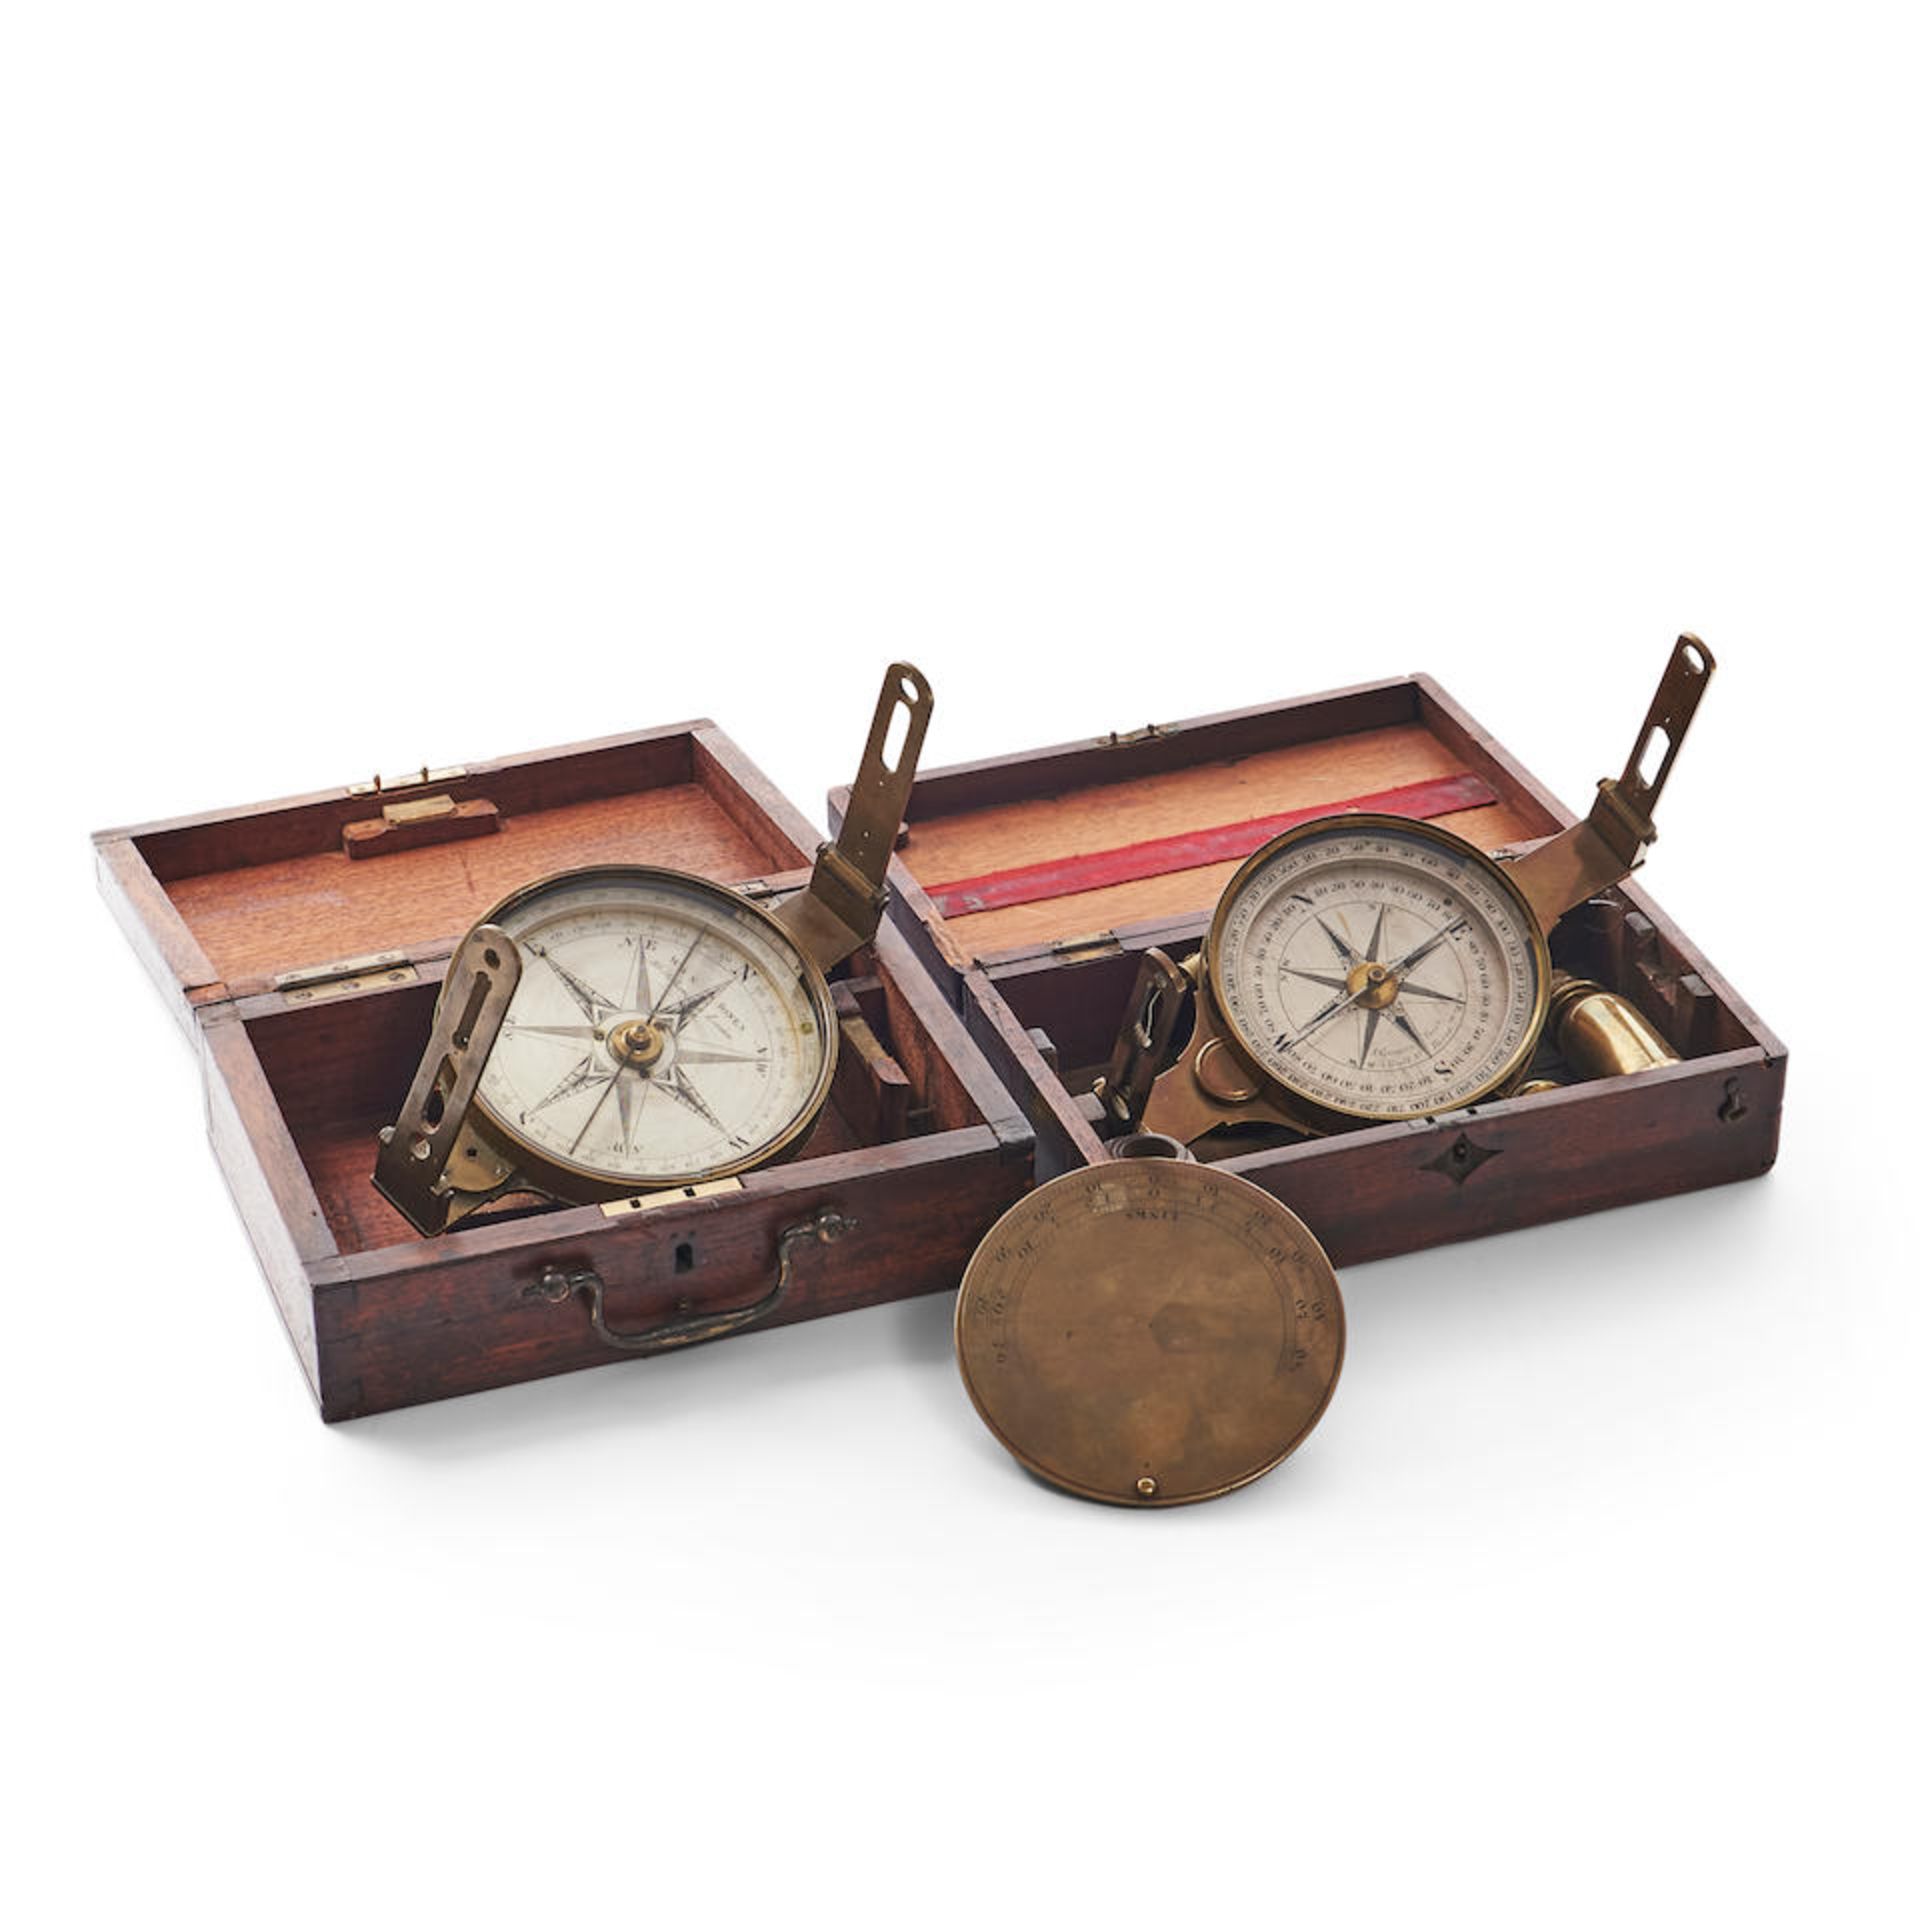 Two London Surveyor's Compasses, 19th century,